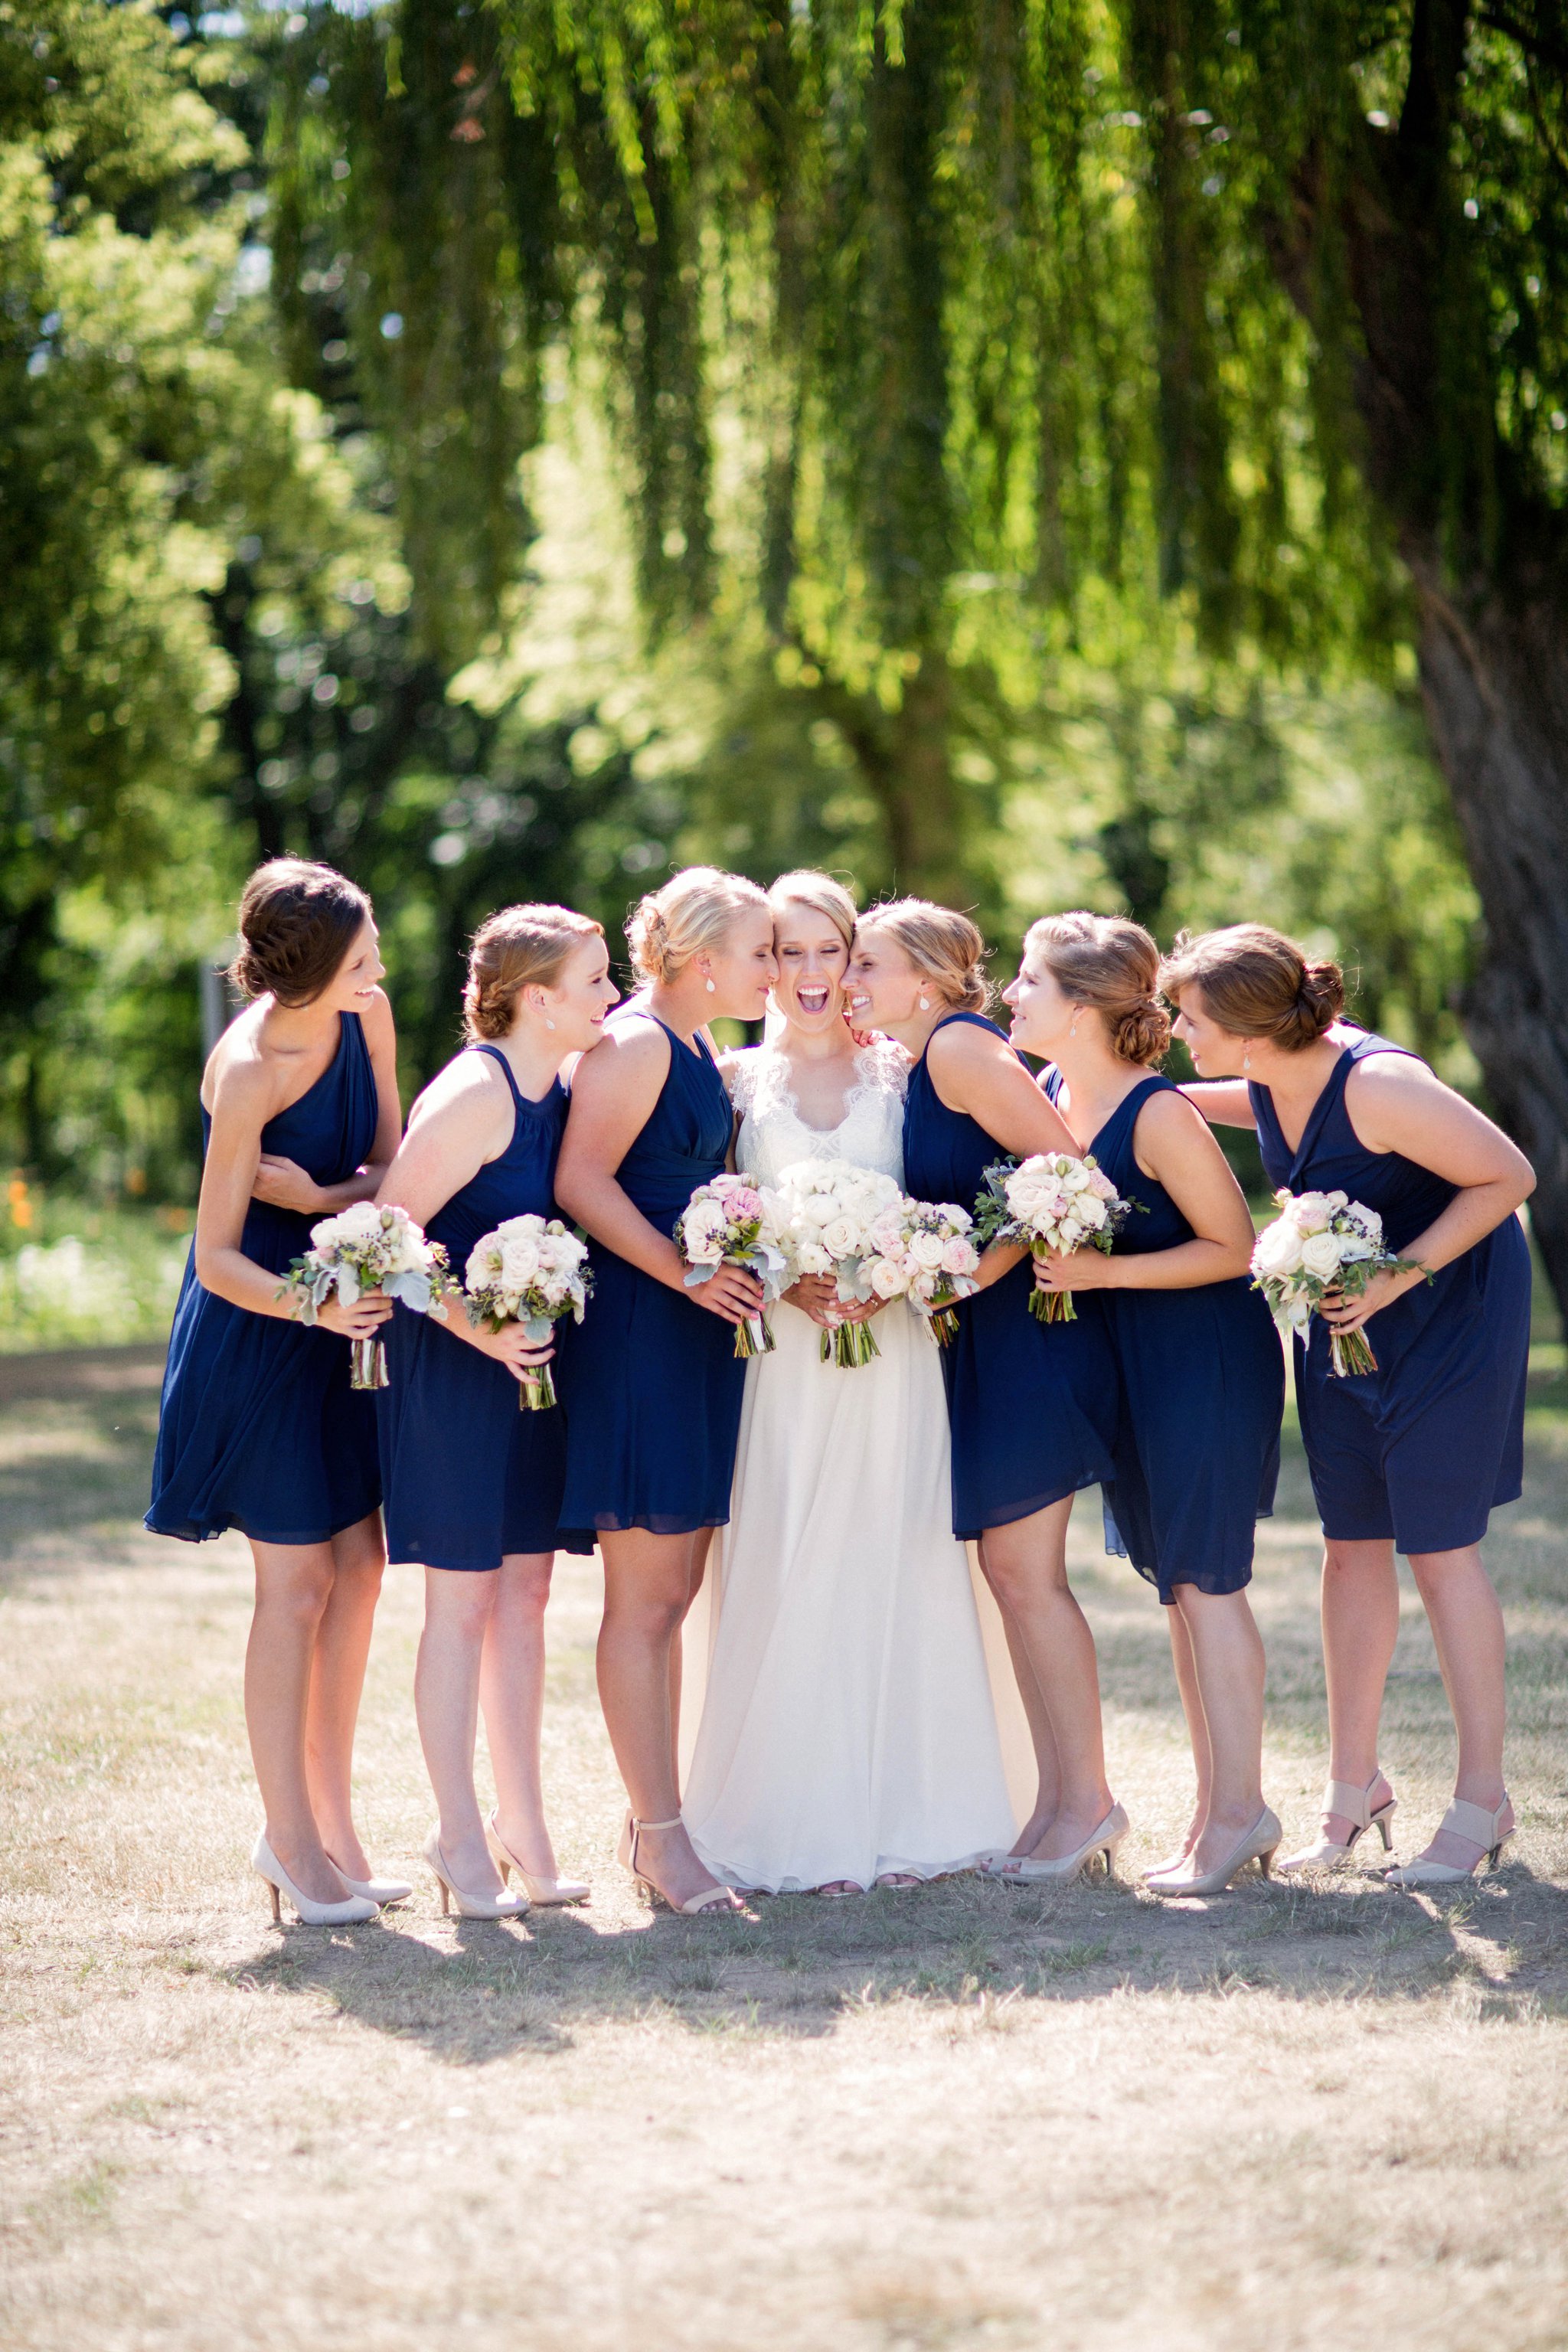 Sioux Falls Wedding Photos | Destination Photographer | Felicia The Photographer | Mary Jo Wegner Arboretum | Bridesmaids Cute | Fun | Candid | Navy short one shoulder dresses